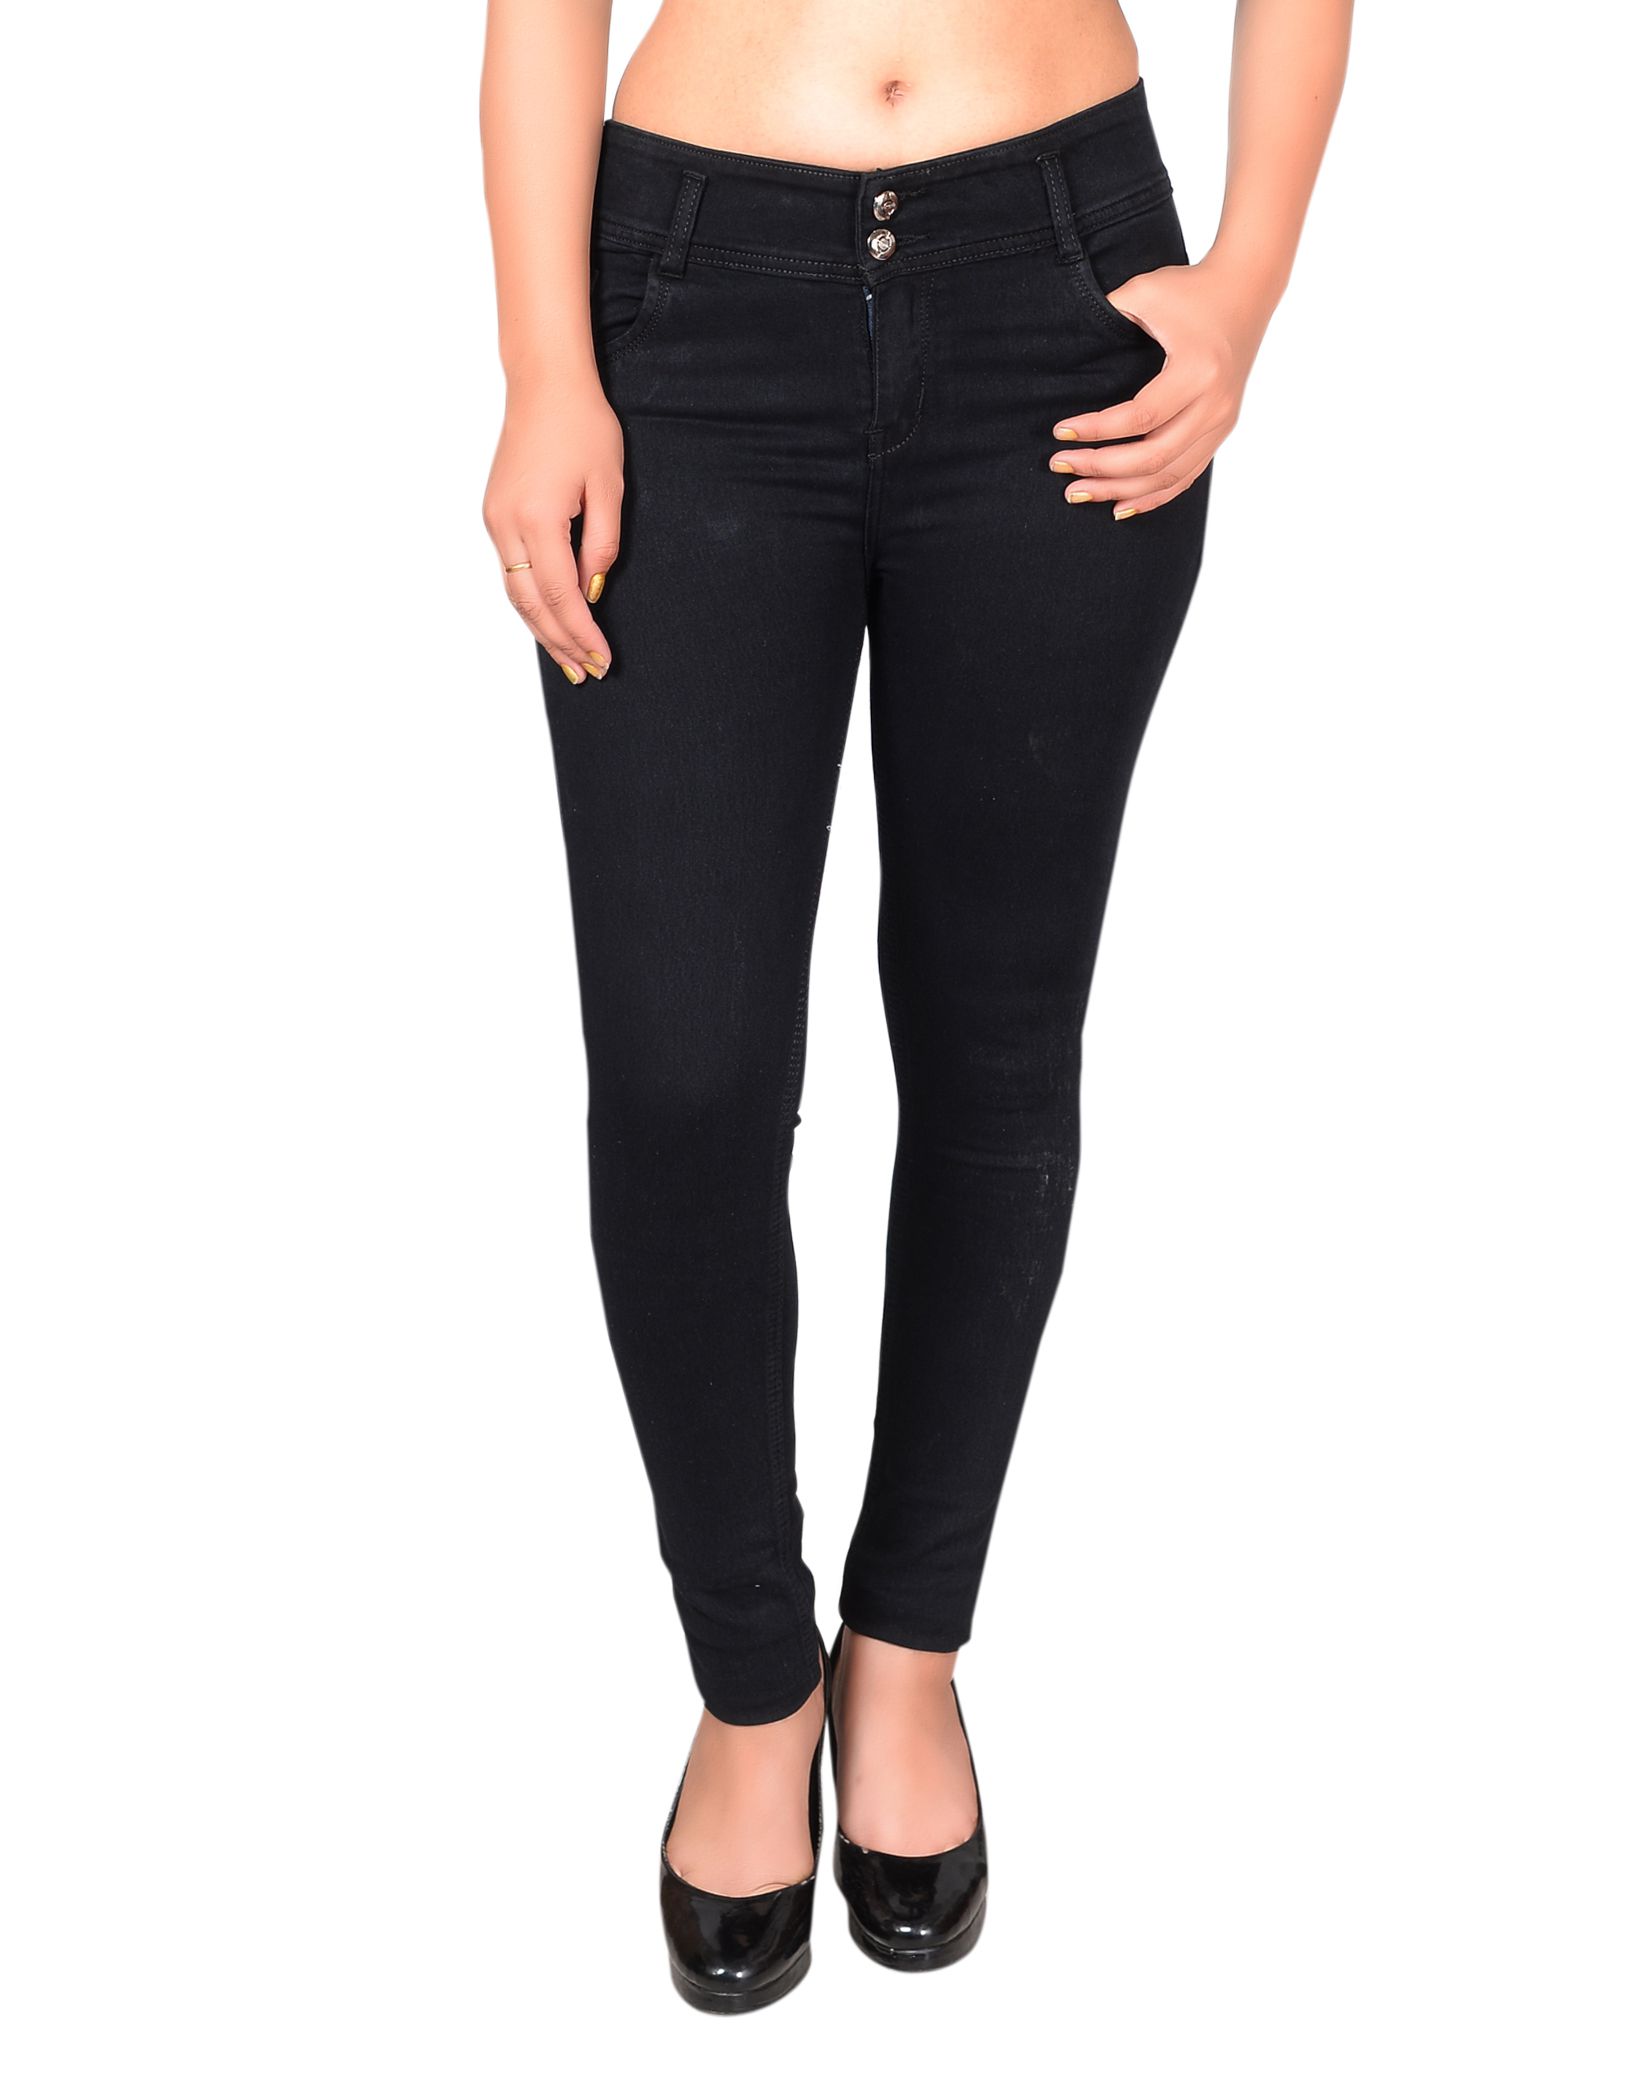 Buy Crazy Girls Denim Jeans - Black Online at Best Prices in India ...